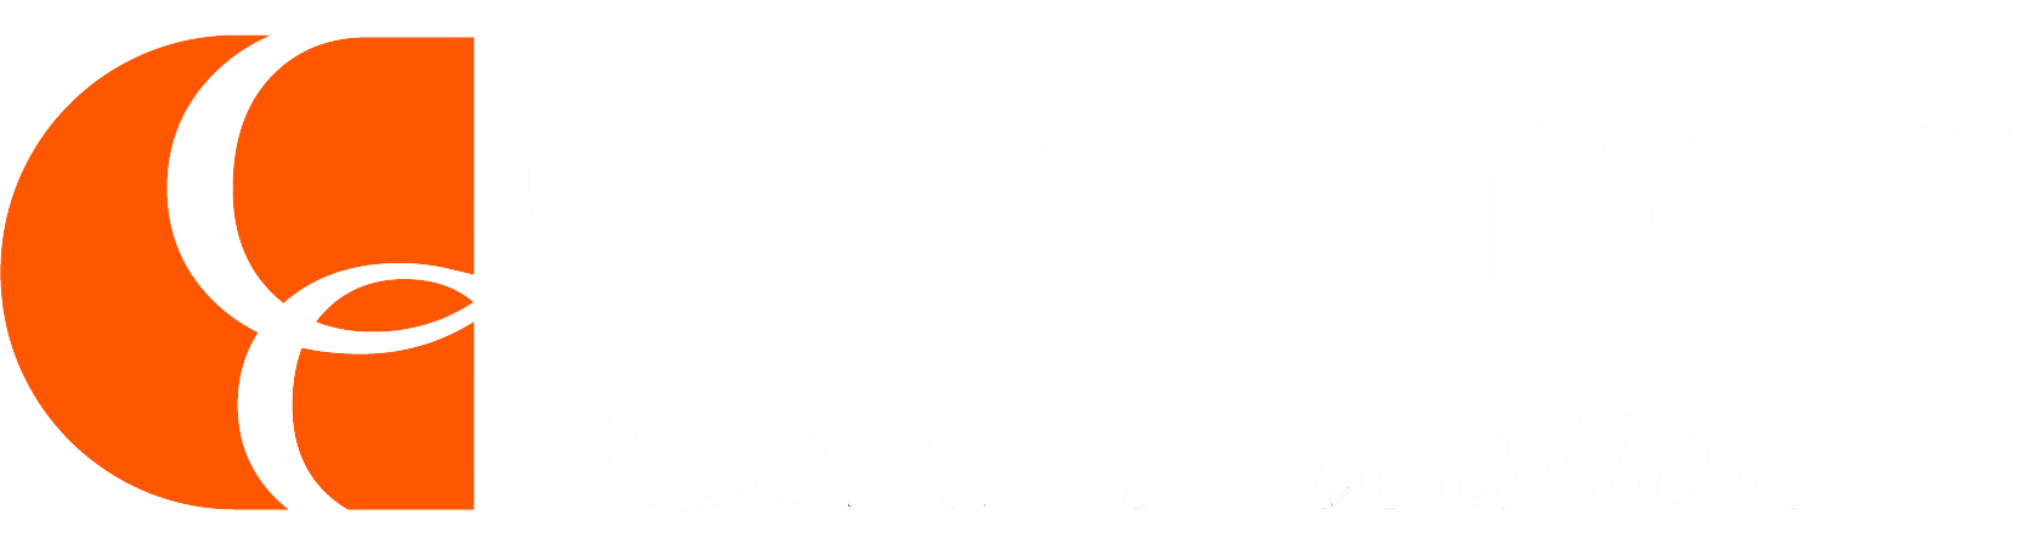 Chronos Communication